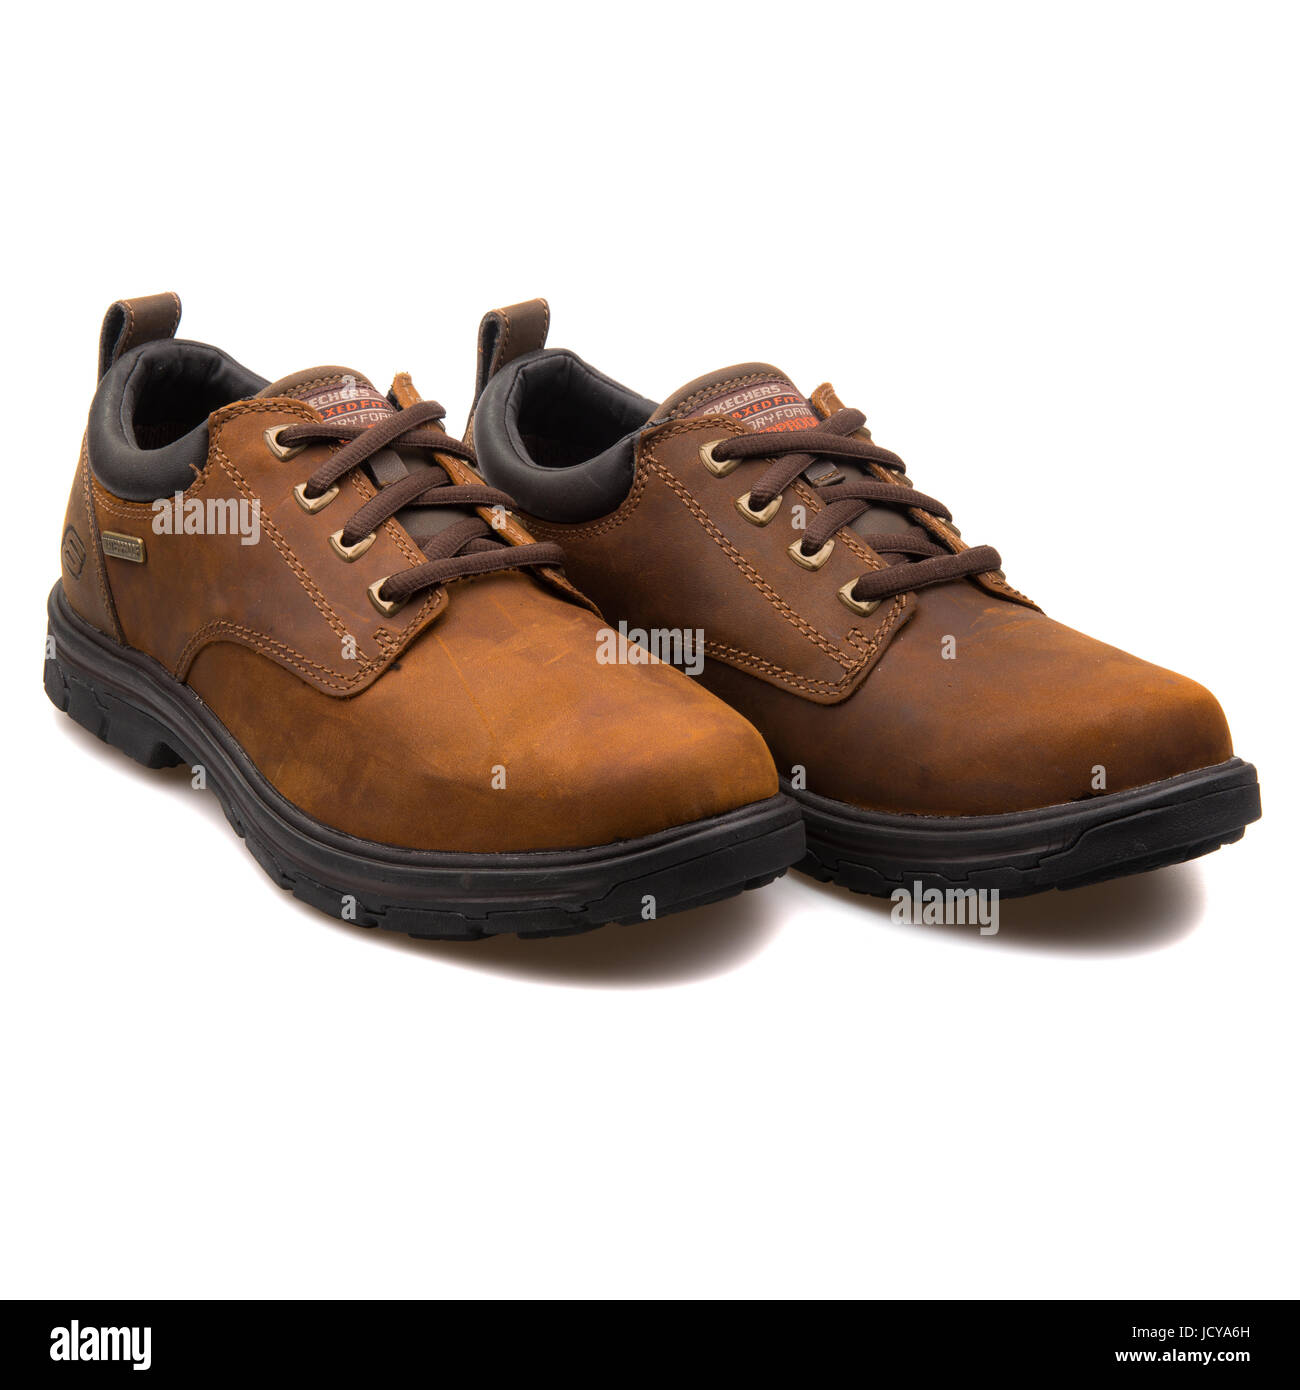 Skechers Segment Bertan Chocolate Leather Men's Casual Shoes - 64517-CHOC  Stock Photo - Alamy